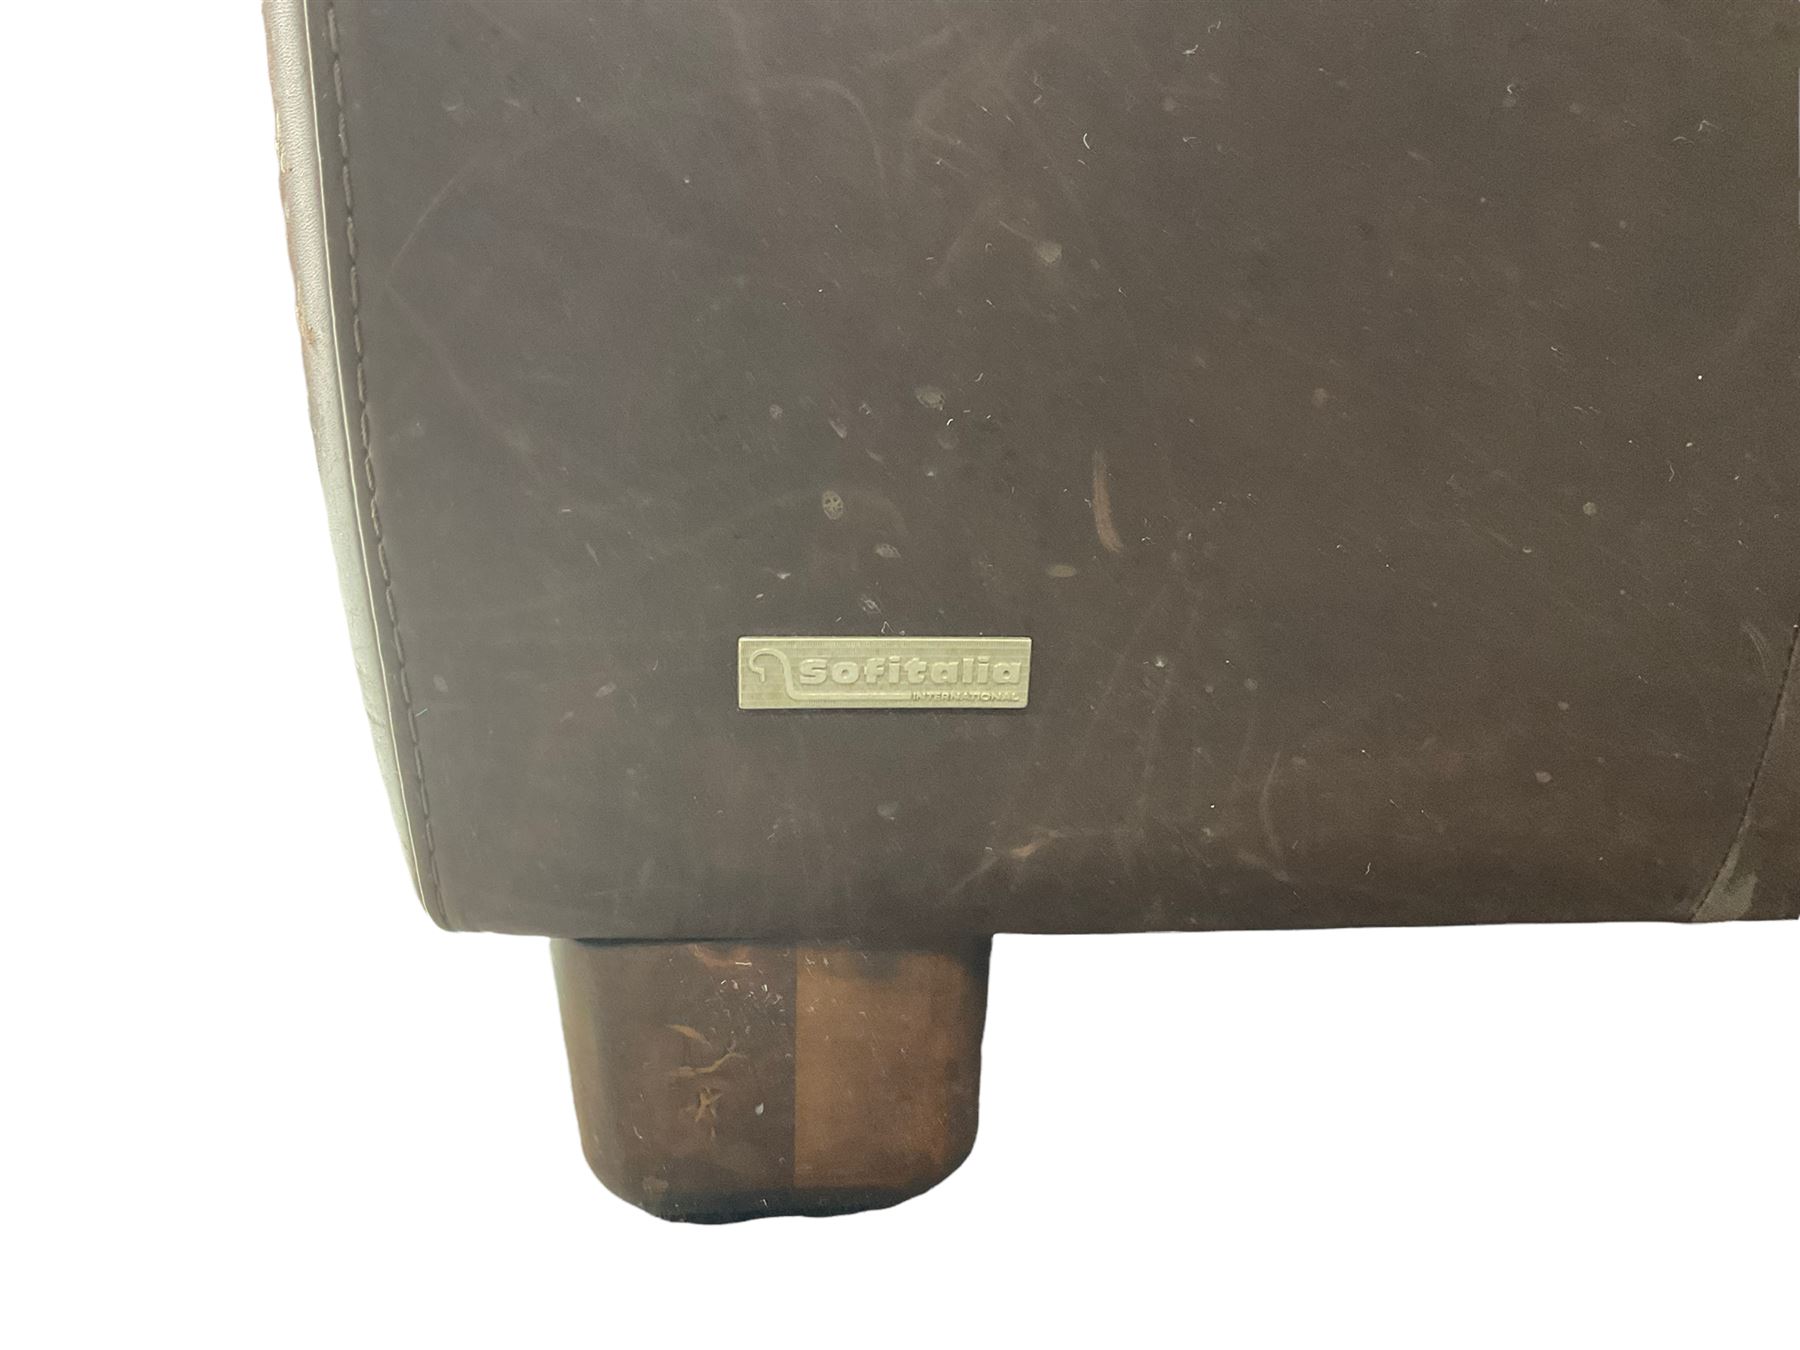 Sofitalia - corner sofa upholstered in tan waxed leather - Image 2 of 6